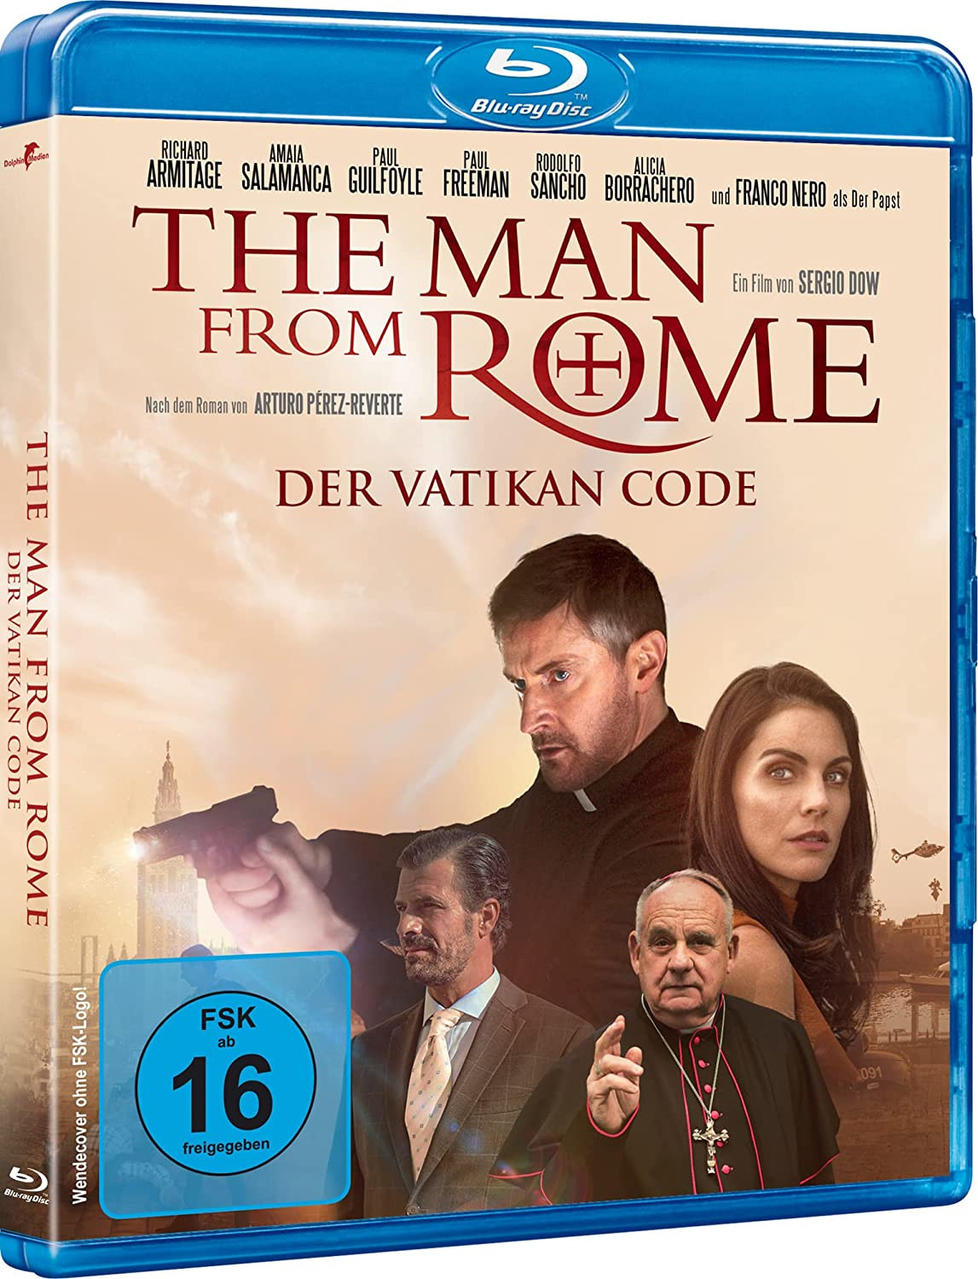 Blu-ray - Der Man Code The Rome from Vatikan